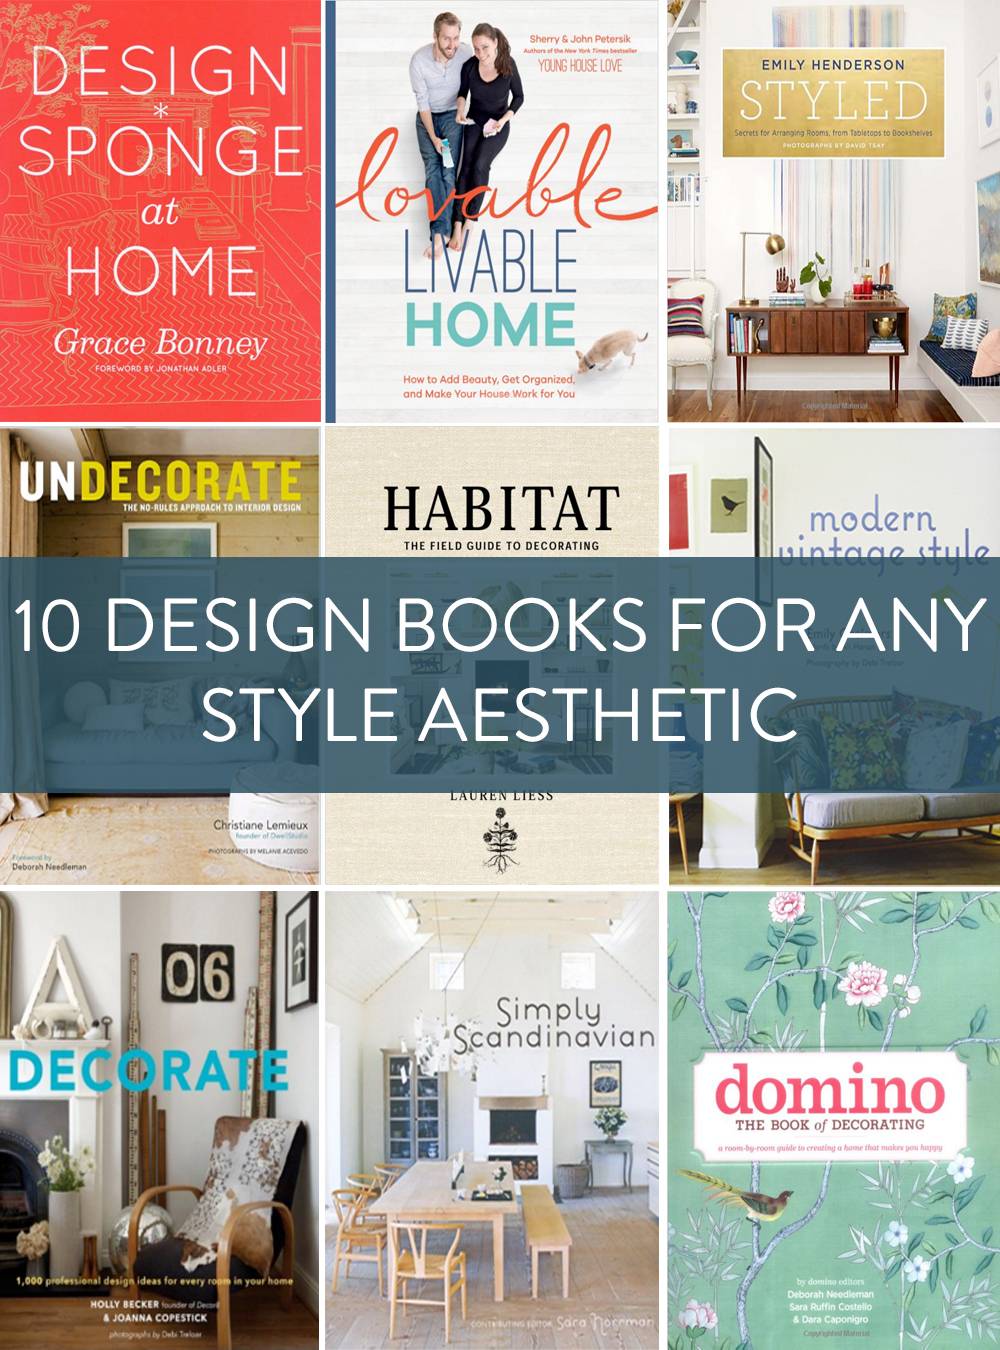 Shopping Guide: 10 Design Books